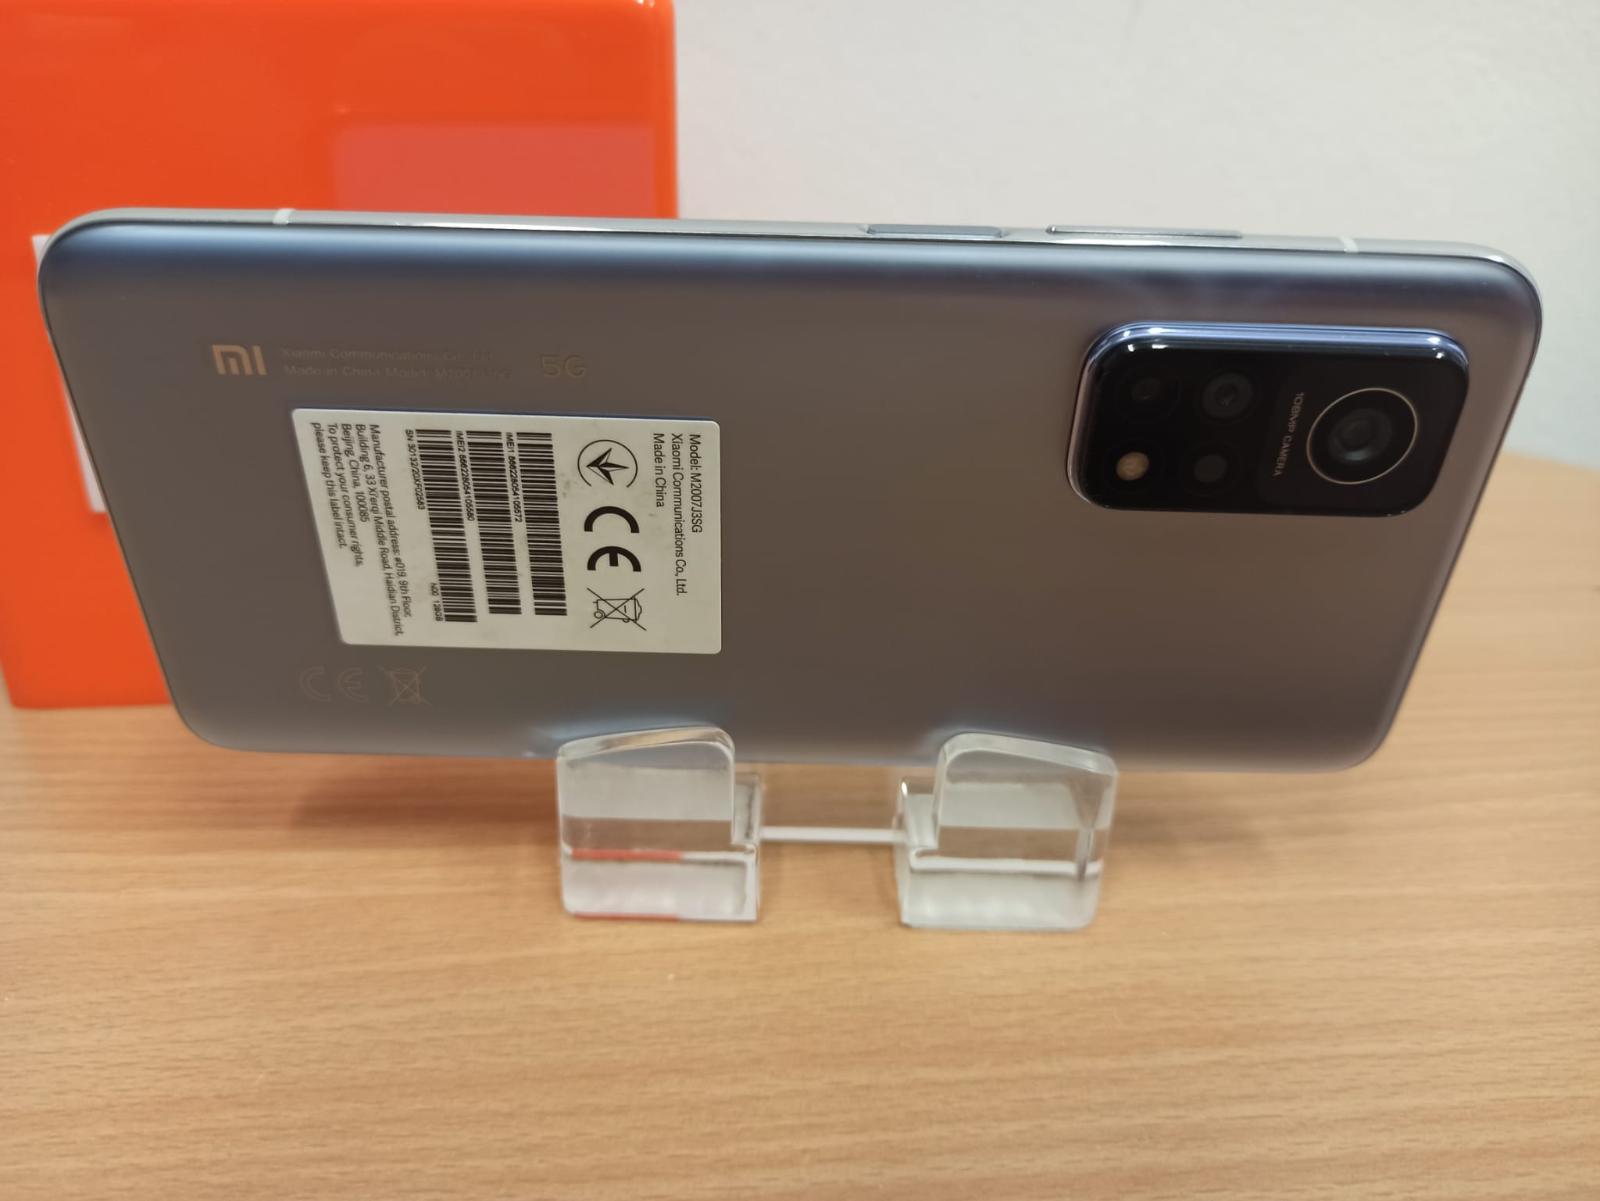 Xiaomi Mi 10T Pro Silver 8GB/128GB - možnost odpočtu DPH! - Mobily a chytrá elektronika